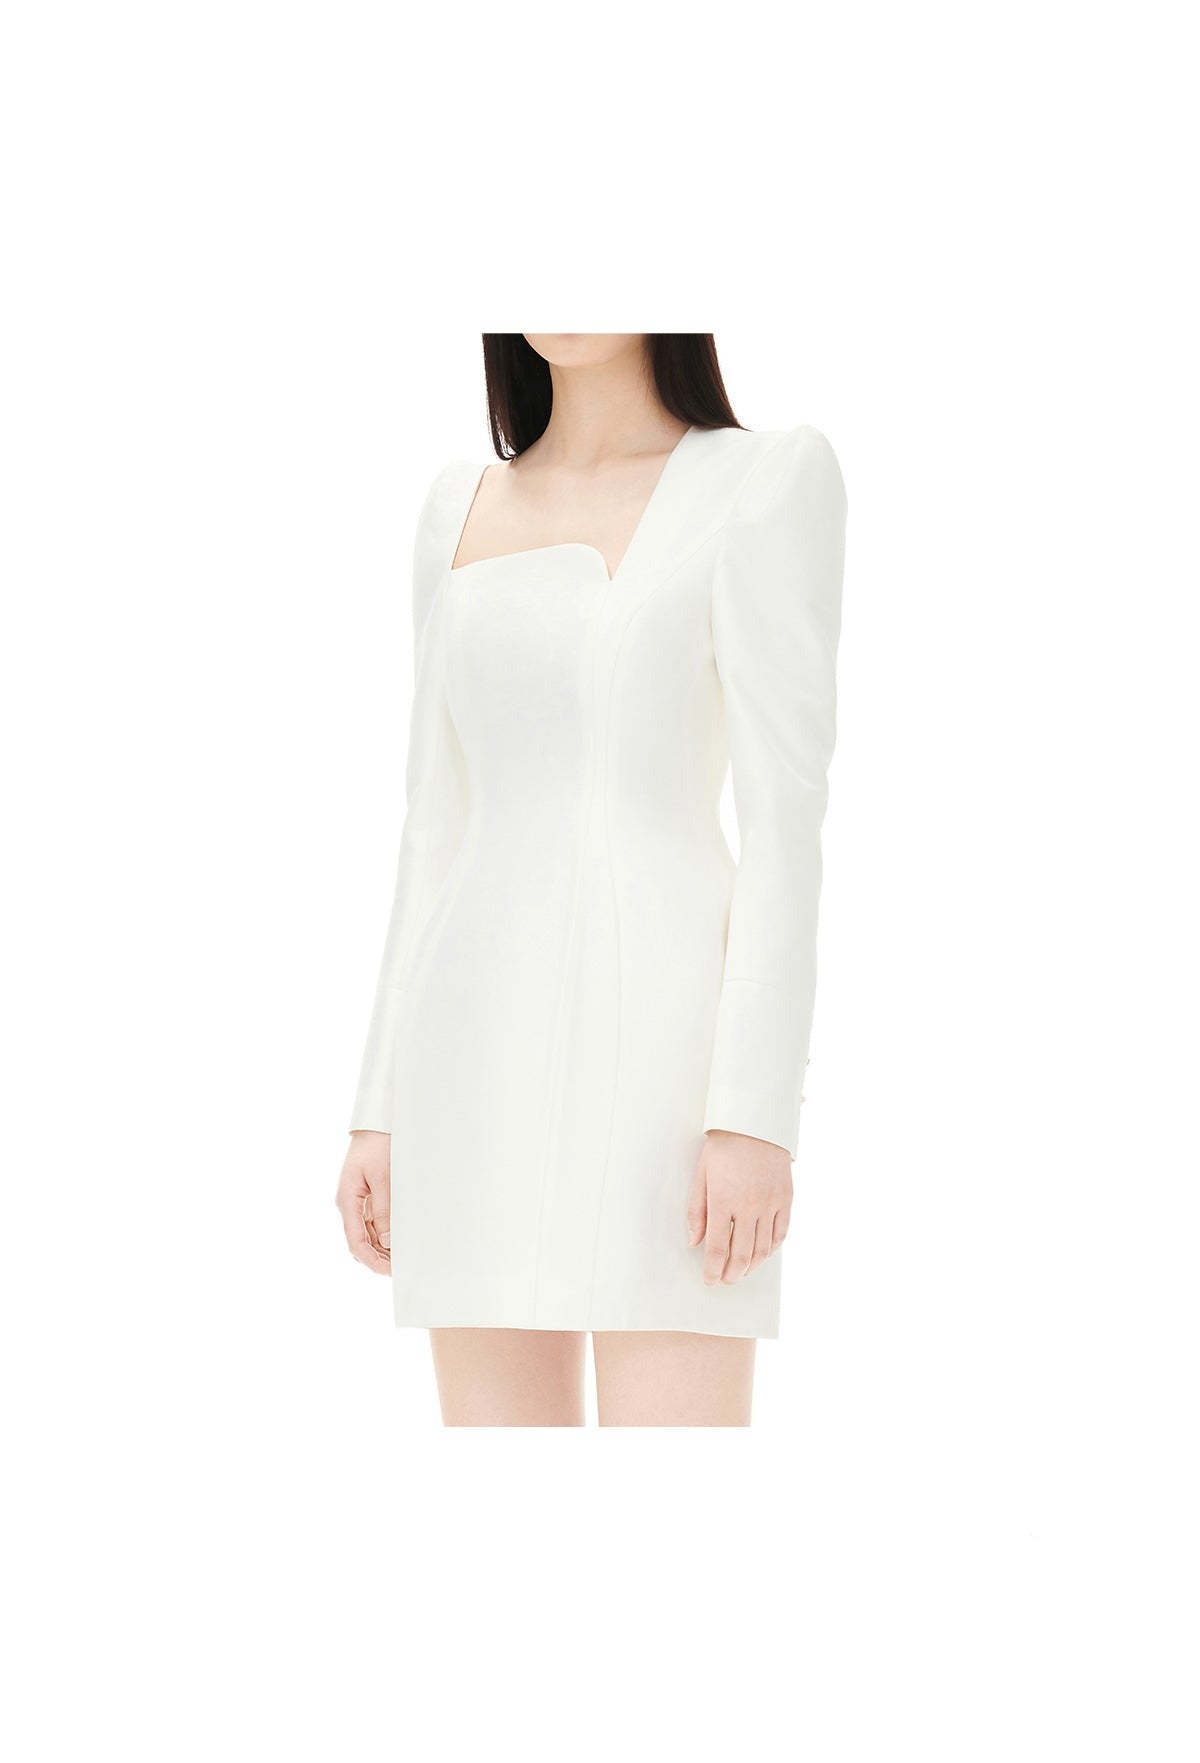 YES BY YESIR  elegant bud cocktail short wedding white dress - Inowe